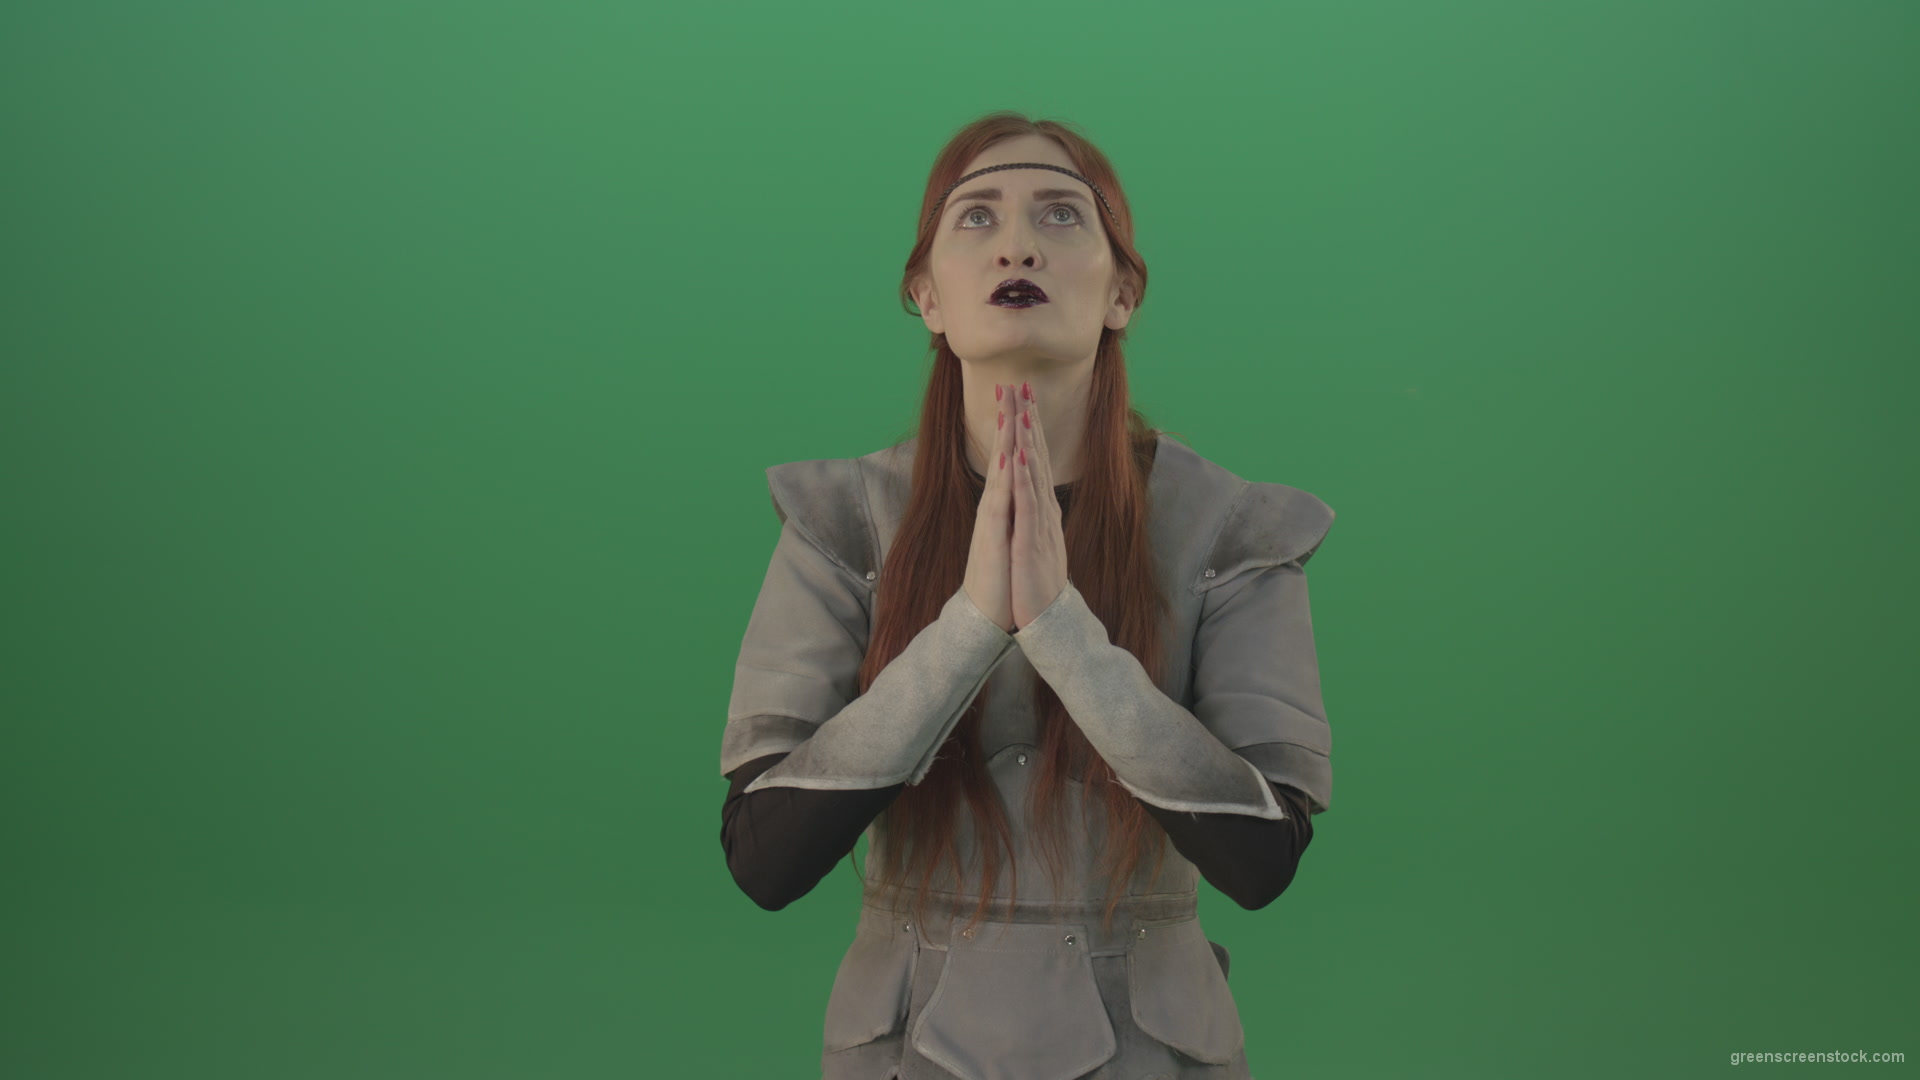 Red-hair-girl-praying-god-in-medieval-warrior-costume-in-green-screen-studio_004 Green Screen Stock